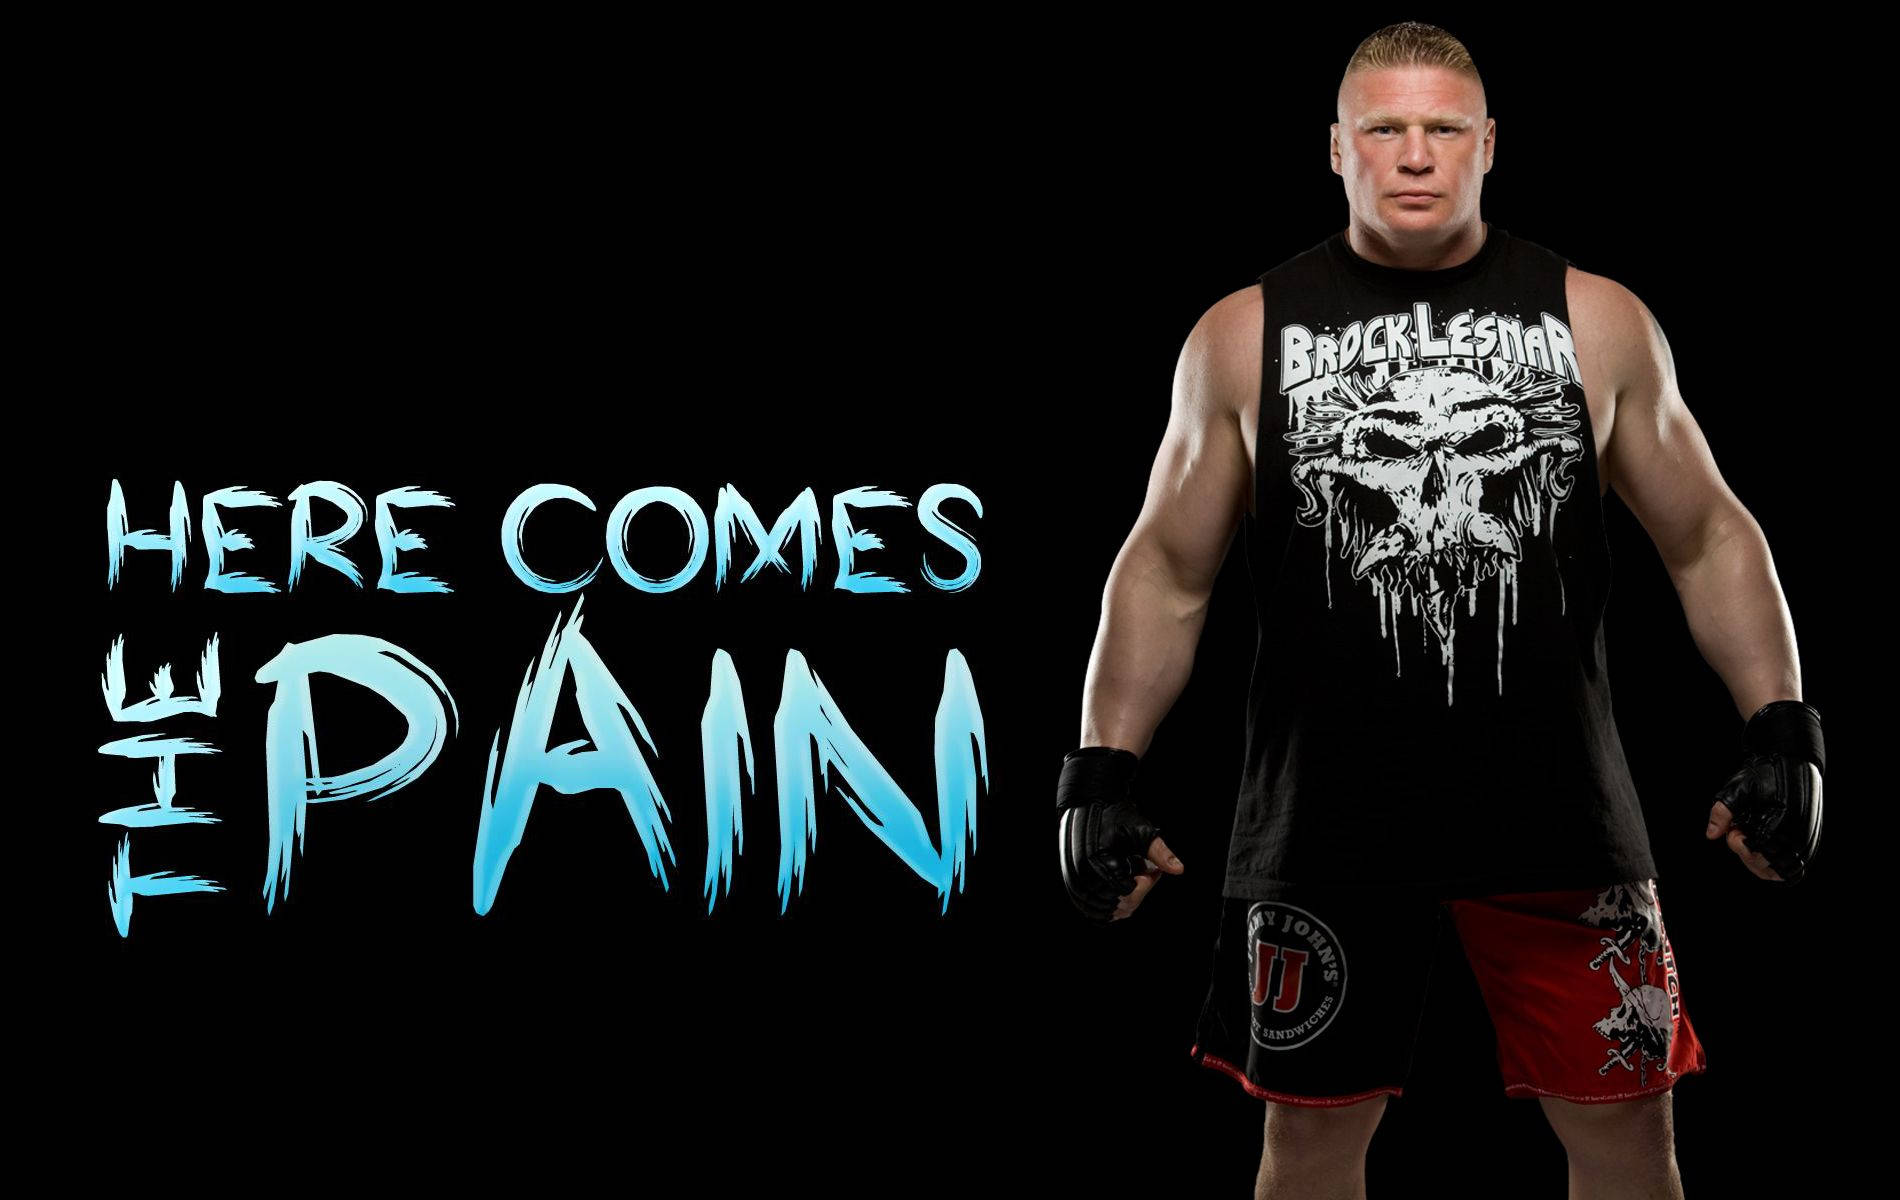 Brock Lesnar Wrestling Star